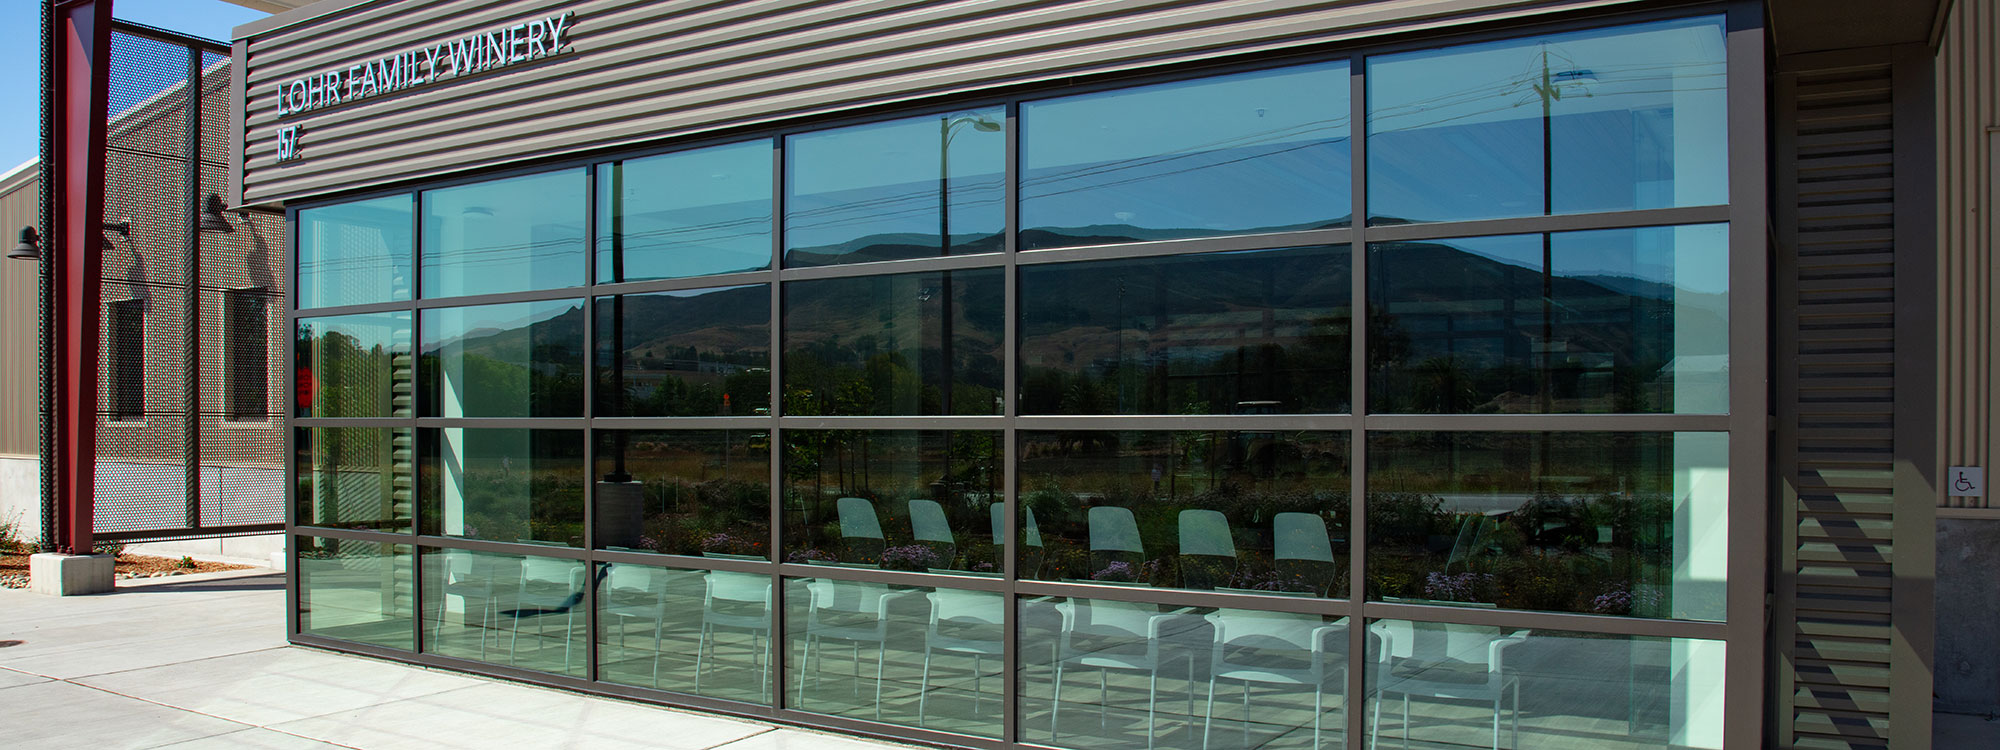 Justin & J Lohr Center for Wine & Viticulture - San Luis Obispo, Paso Robles, California - Viticulture Education Facility Construction - JW Design & Construction